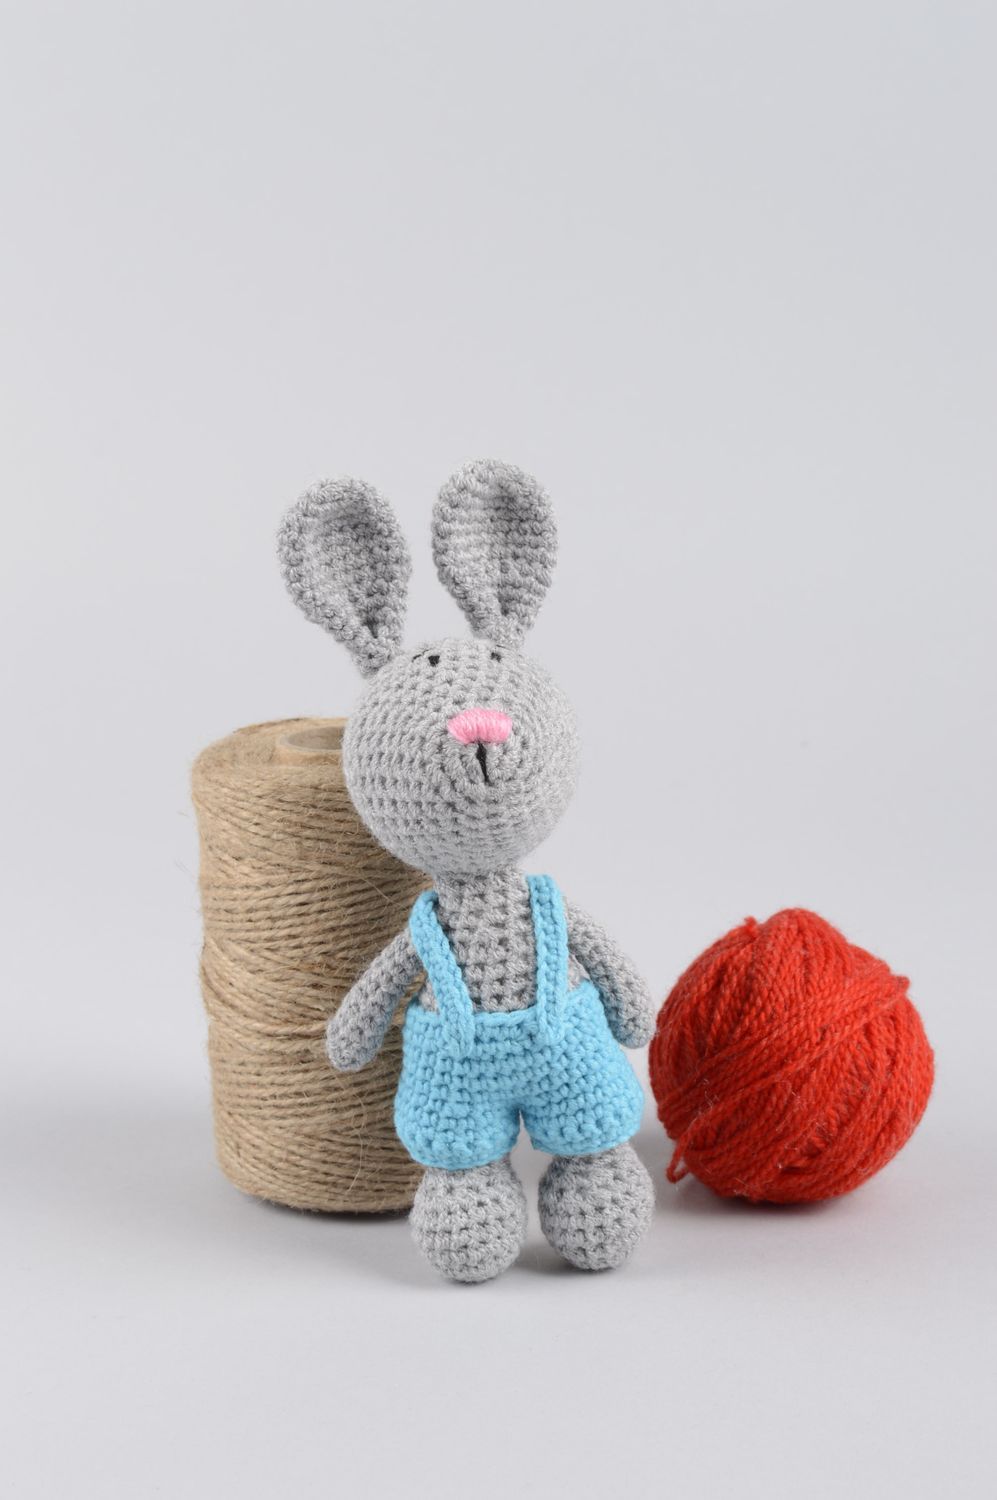 Beautiful handmade soft toy unusual crochet toy for kids birthday gift ideas photo 5